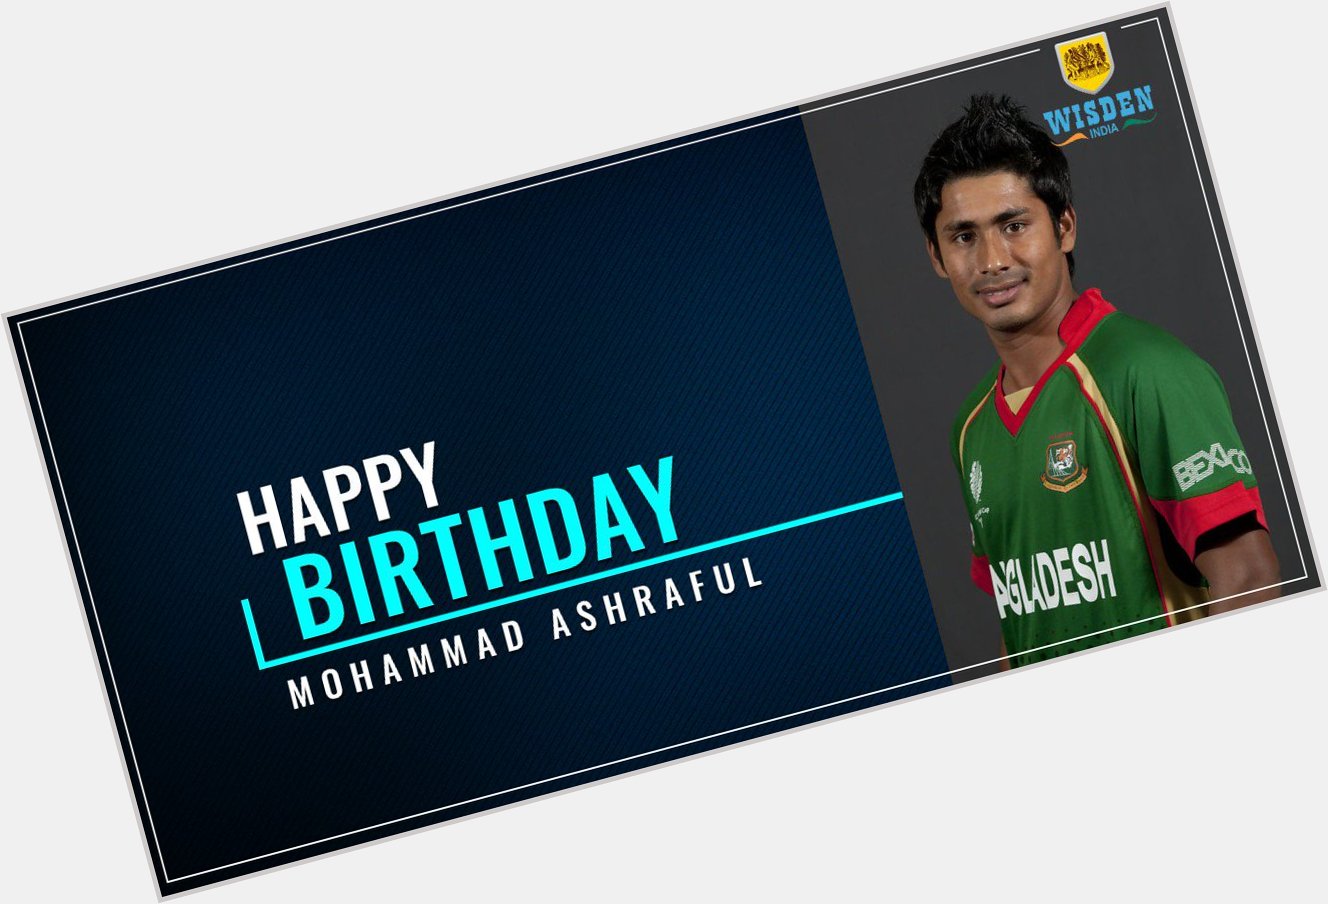 Happy Birthday to Mohammad Ashraful! 